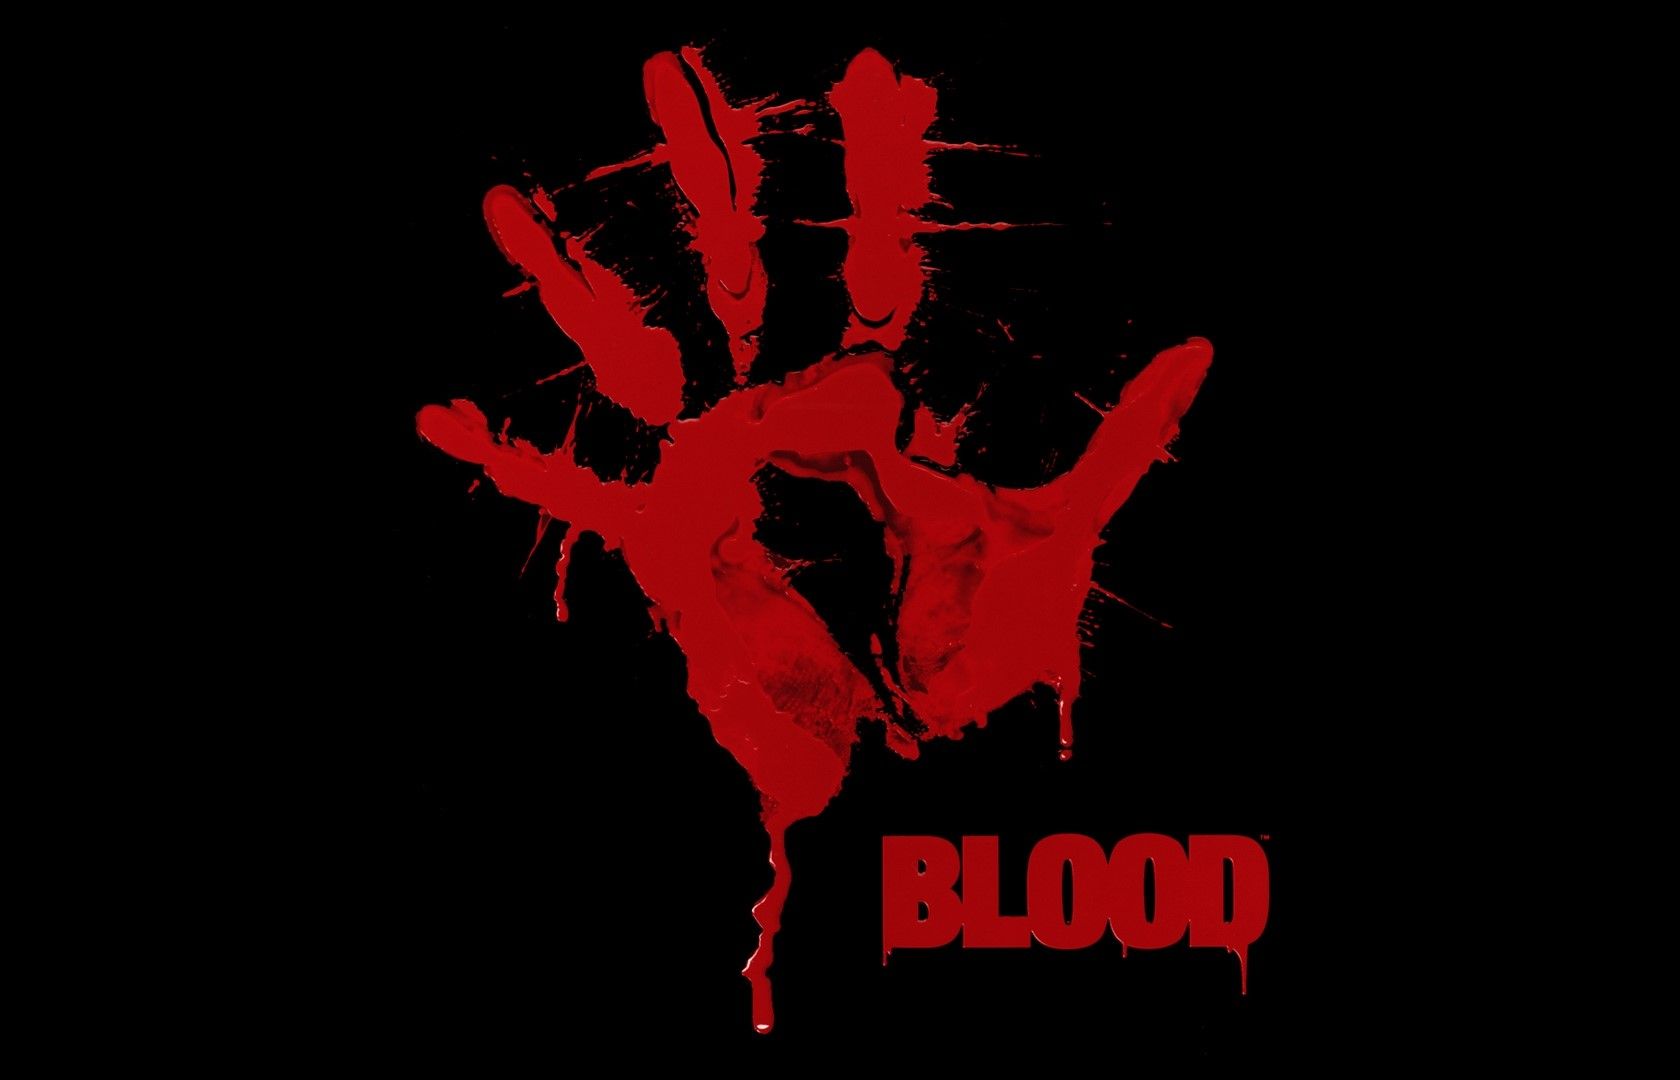 Hand, Print, Red, Black, Blood wallpaper. Mocah.org HD Desktop Wallpaper